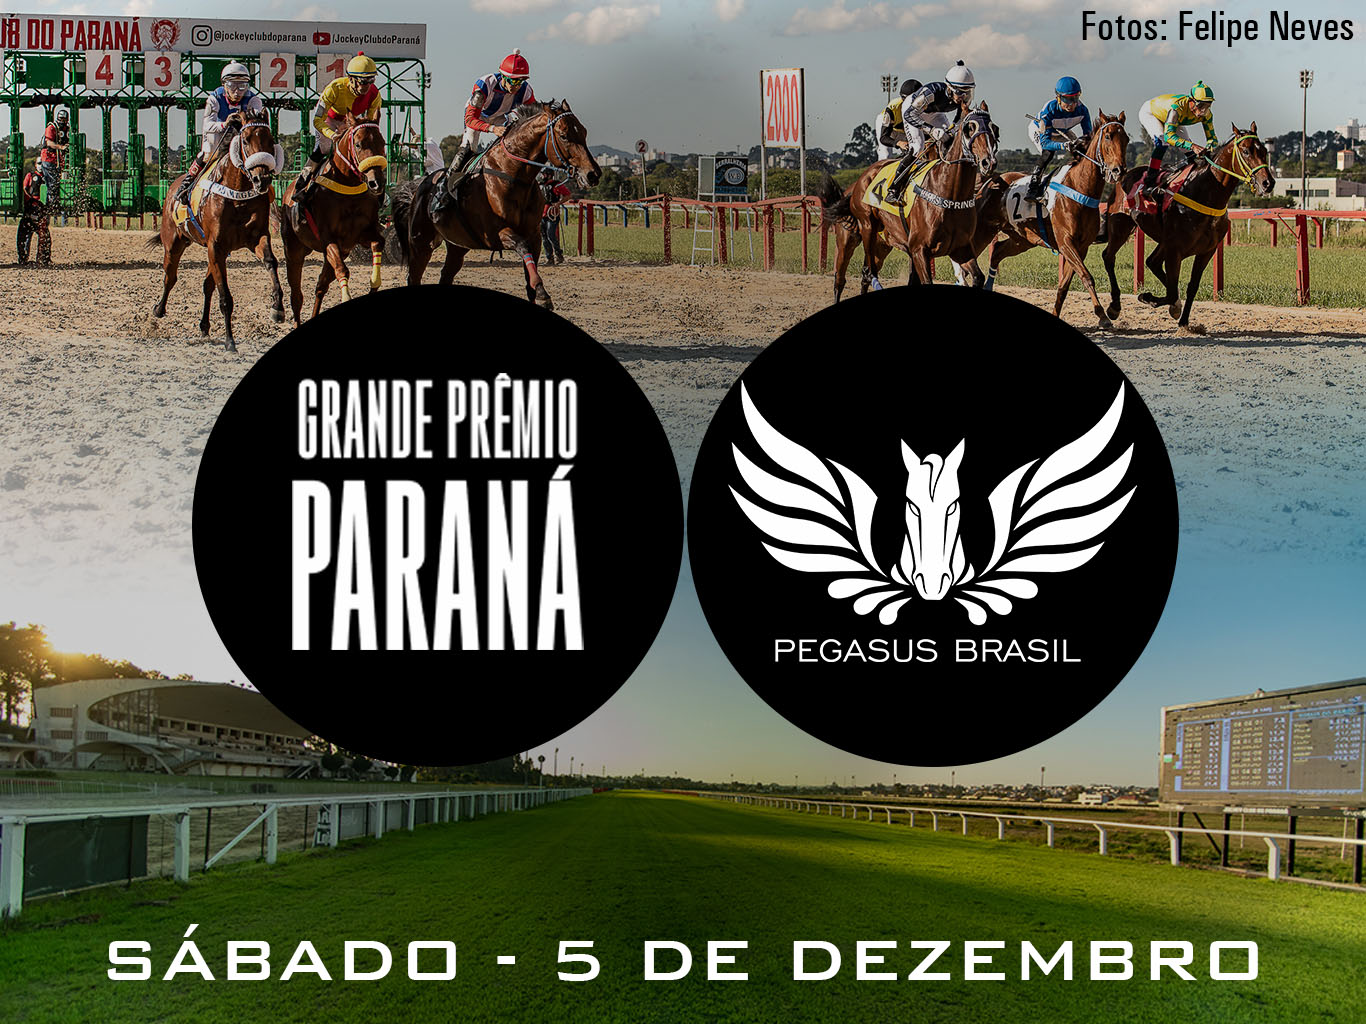 Grande Prêmio “Paraná” – (G3) terá bolsa de R$ 67.320,00